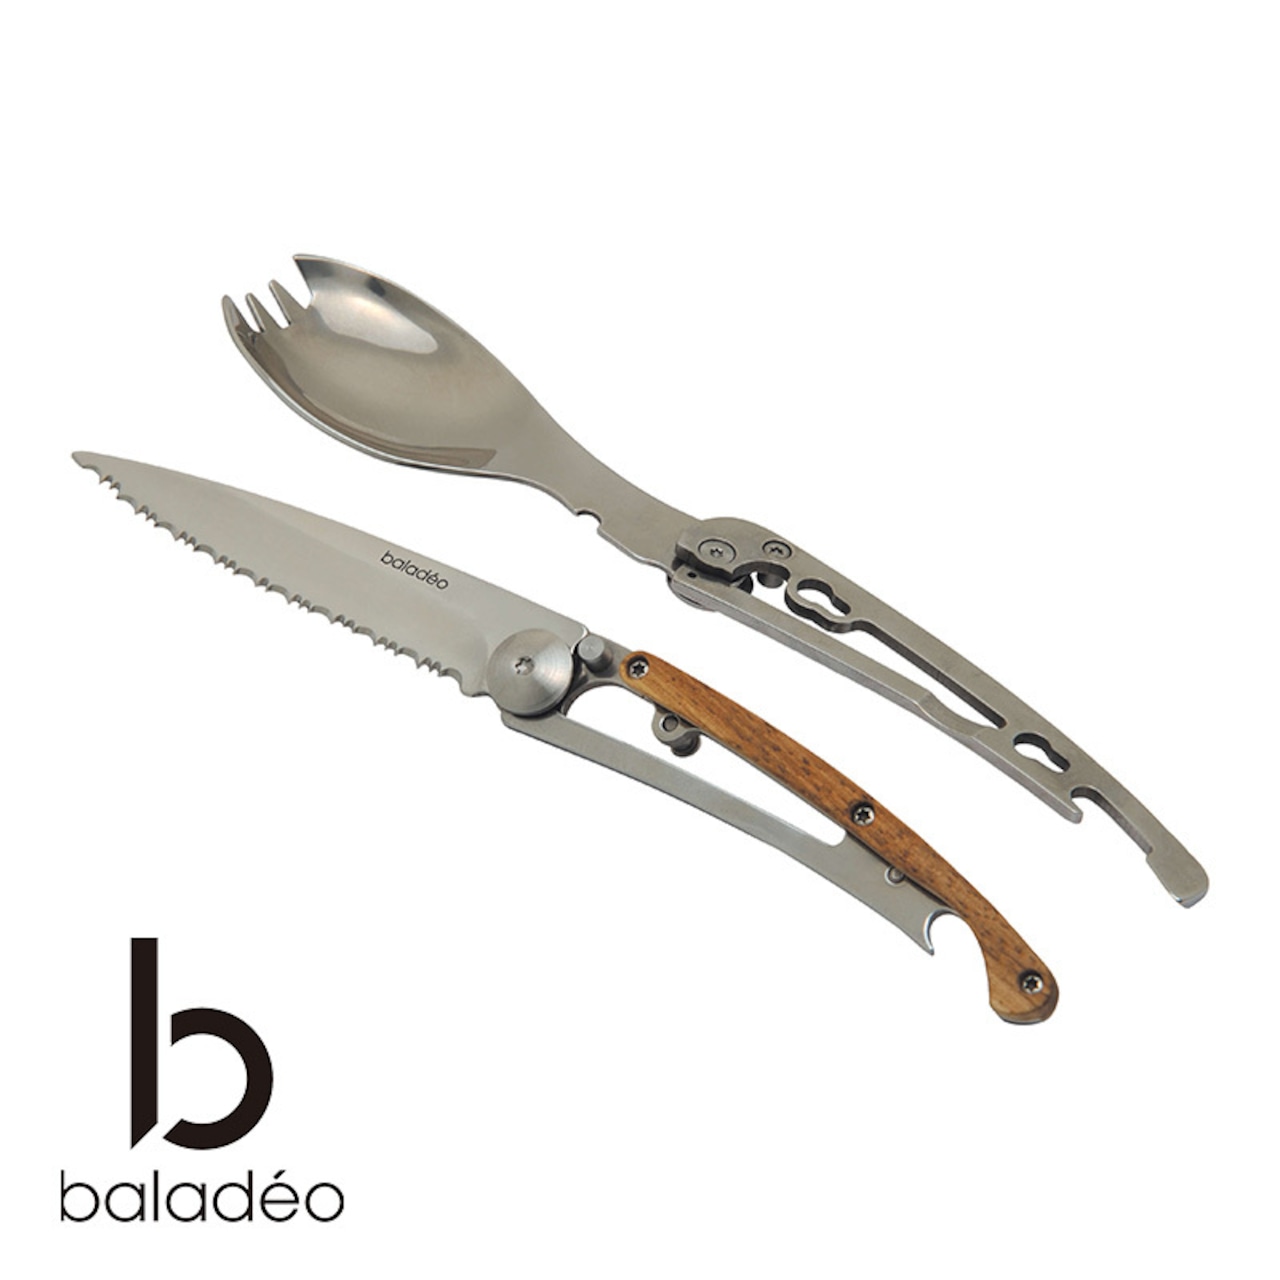 baladeo(バラデオ) Cutlery set Ultimate bd-0115